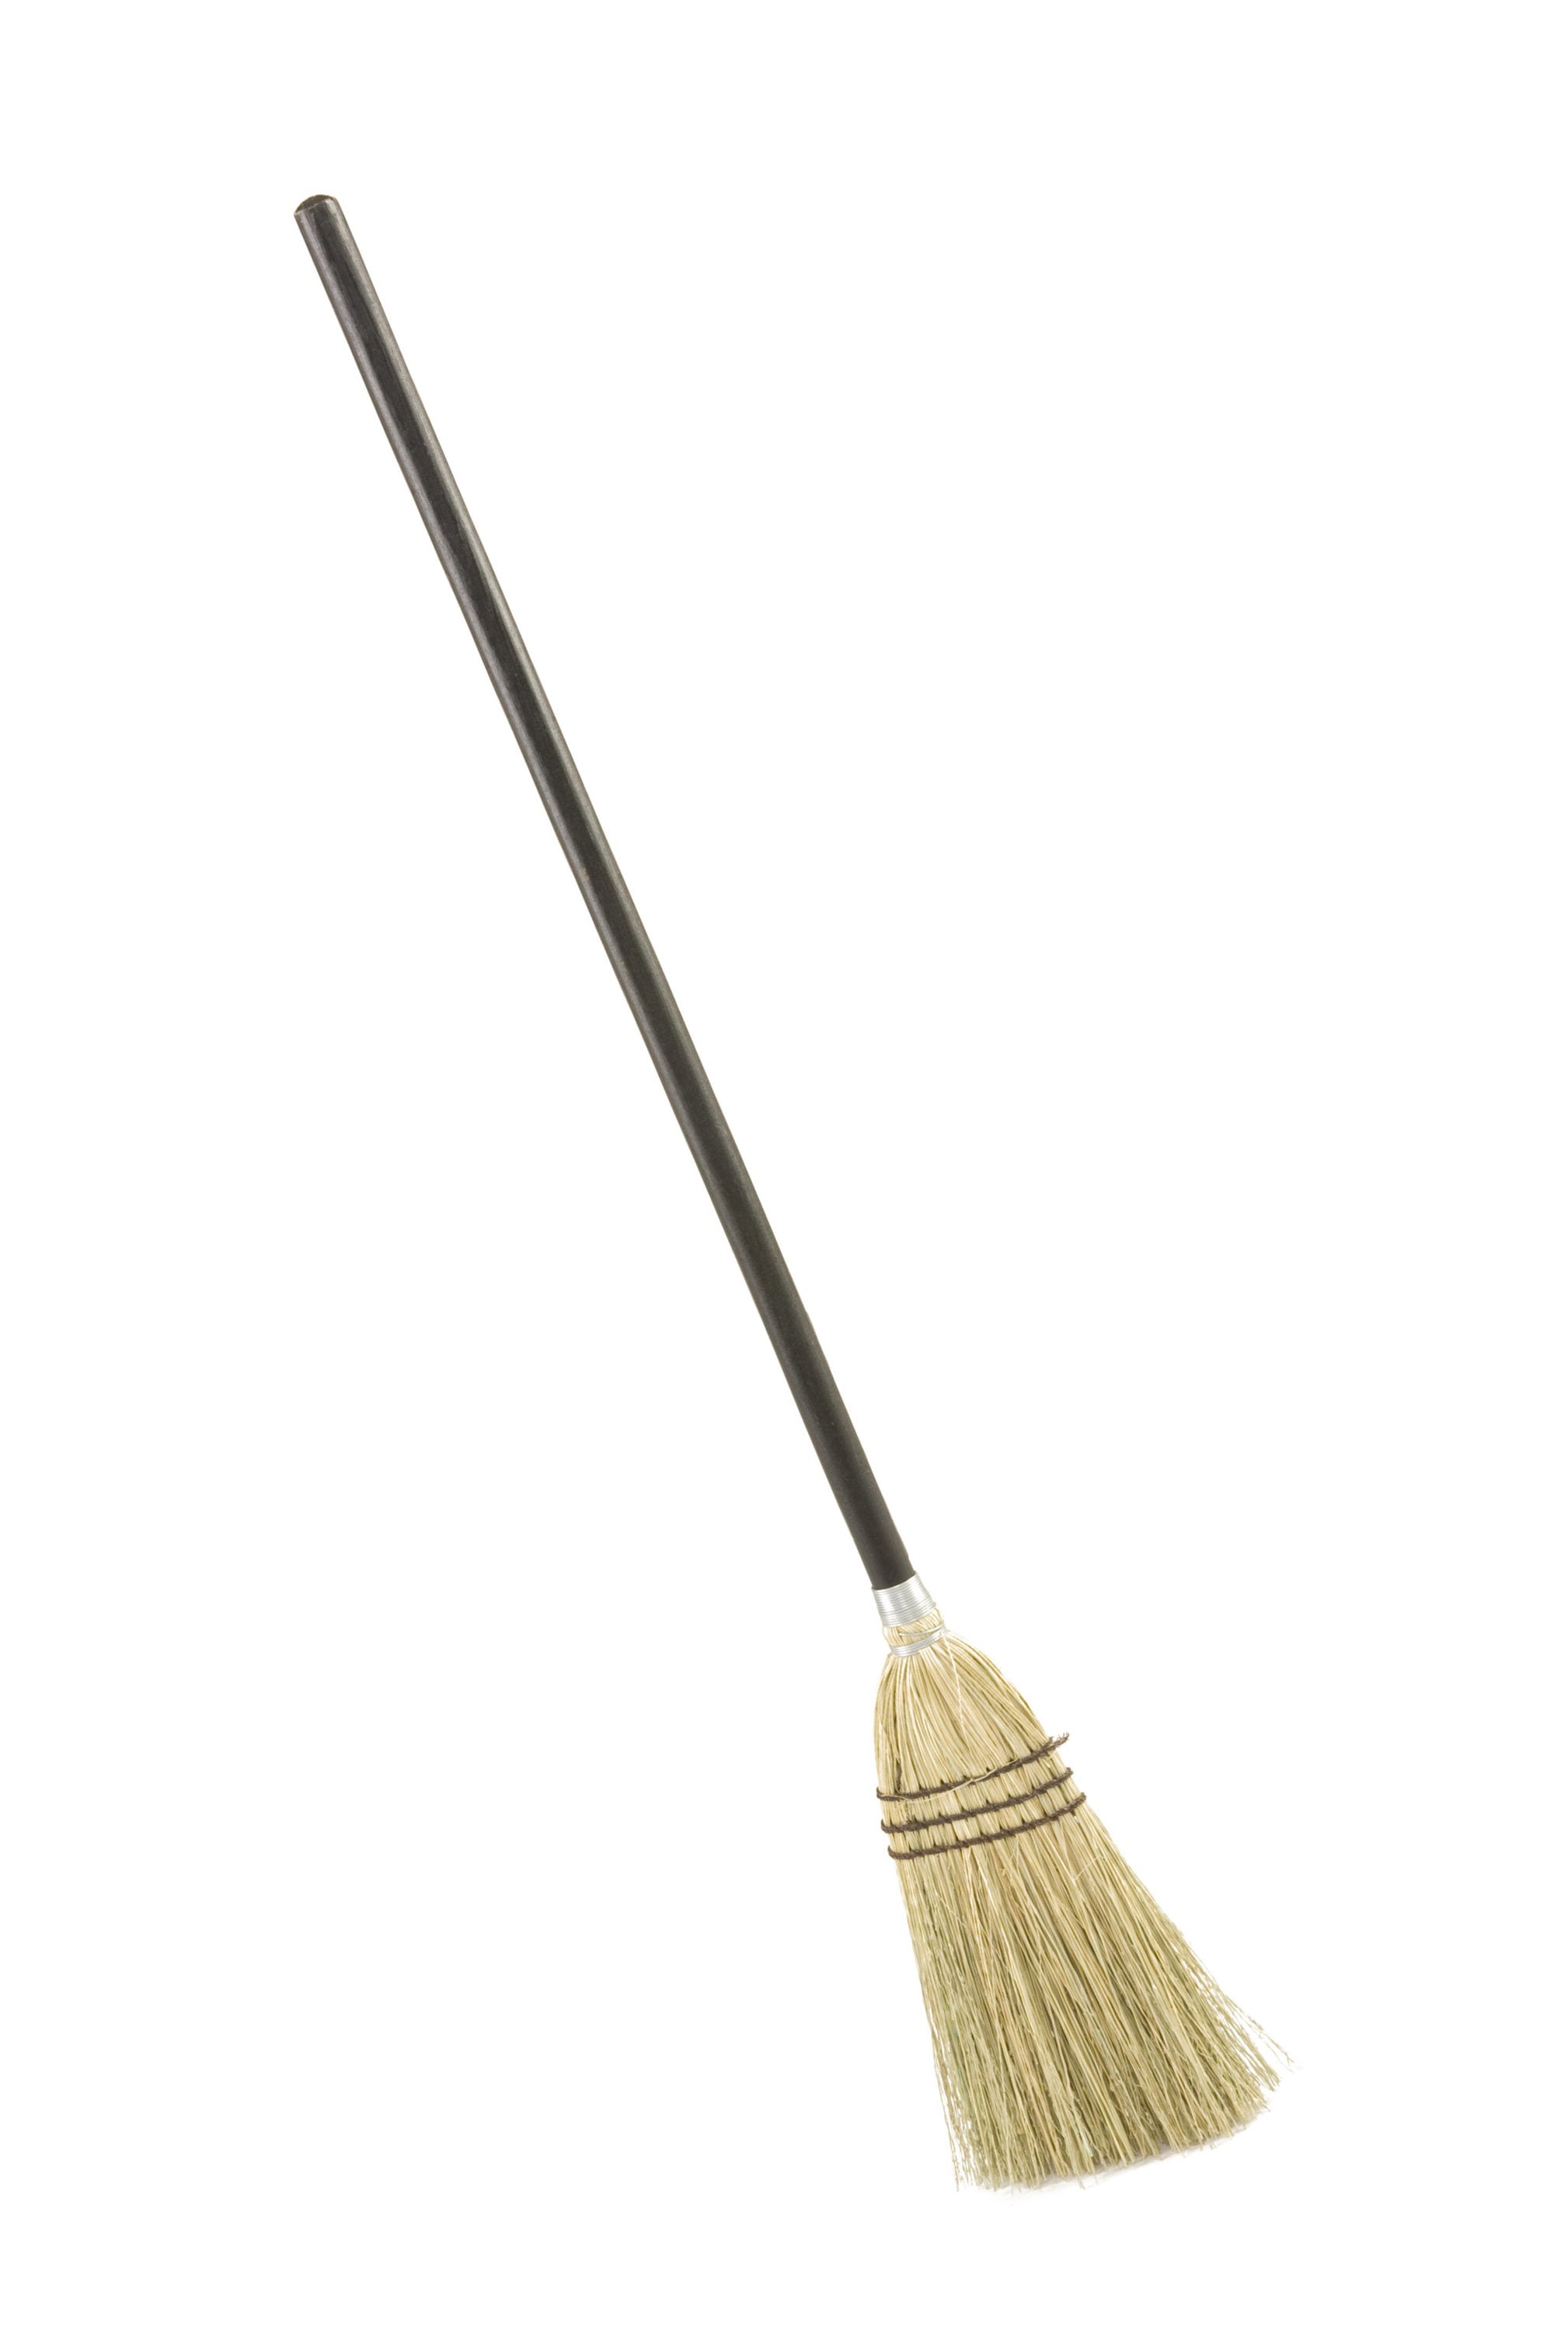 Rubbermaid Commercial Rubbermaid® Commercial Corn Whisk Broom